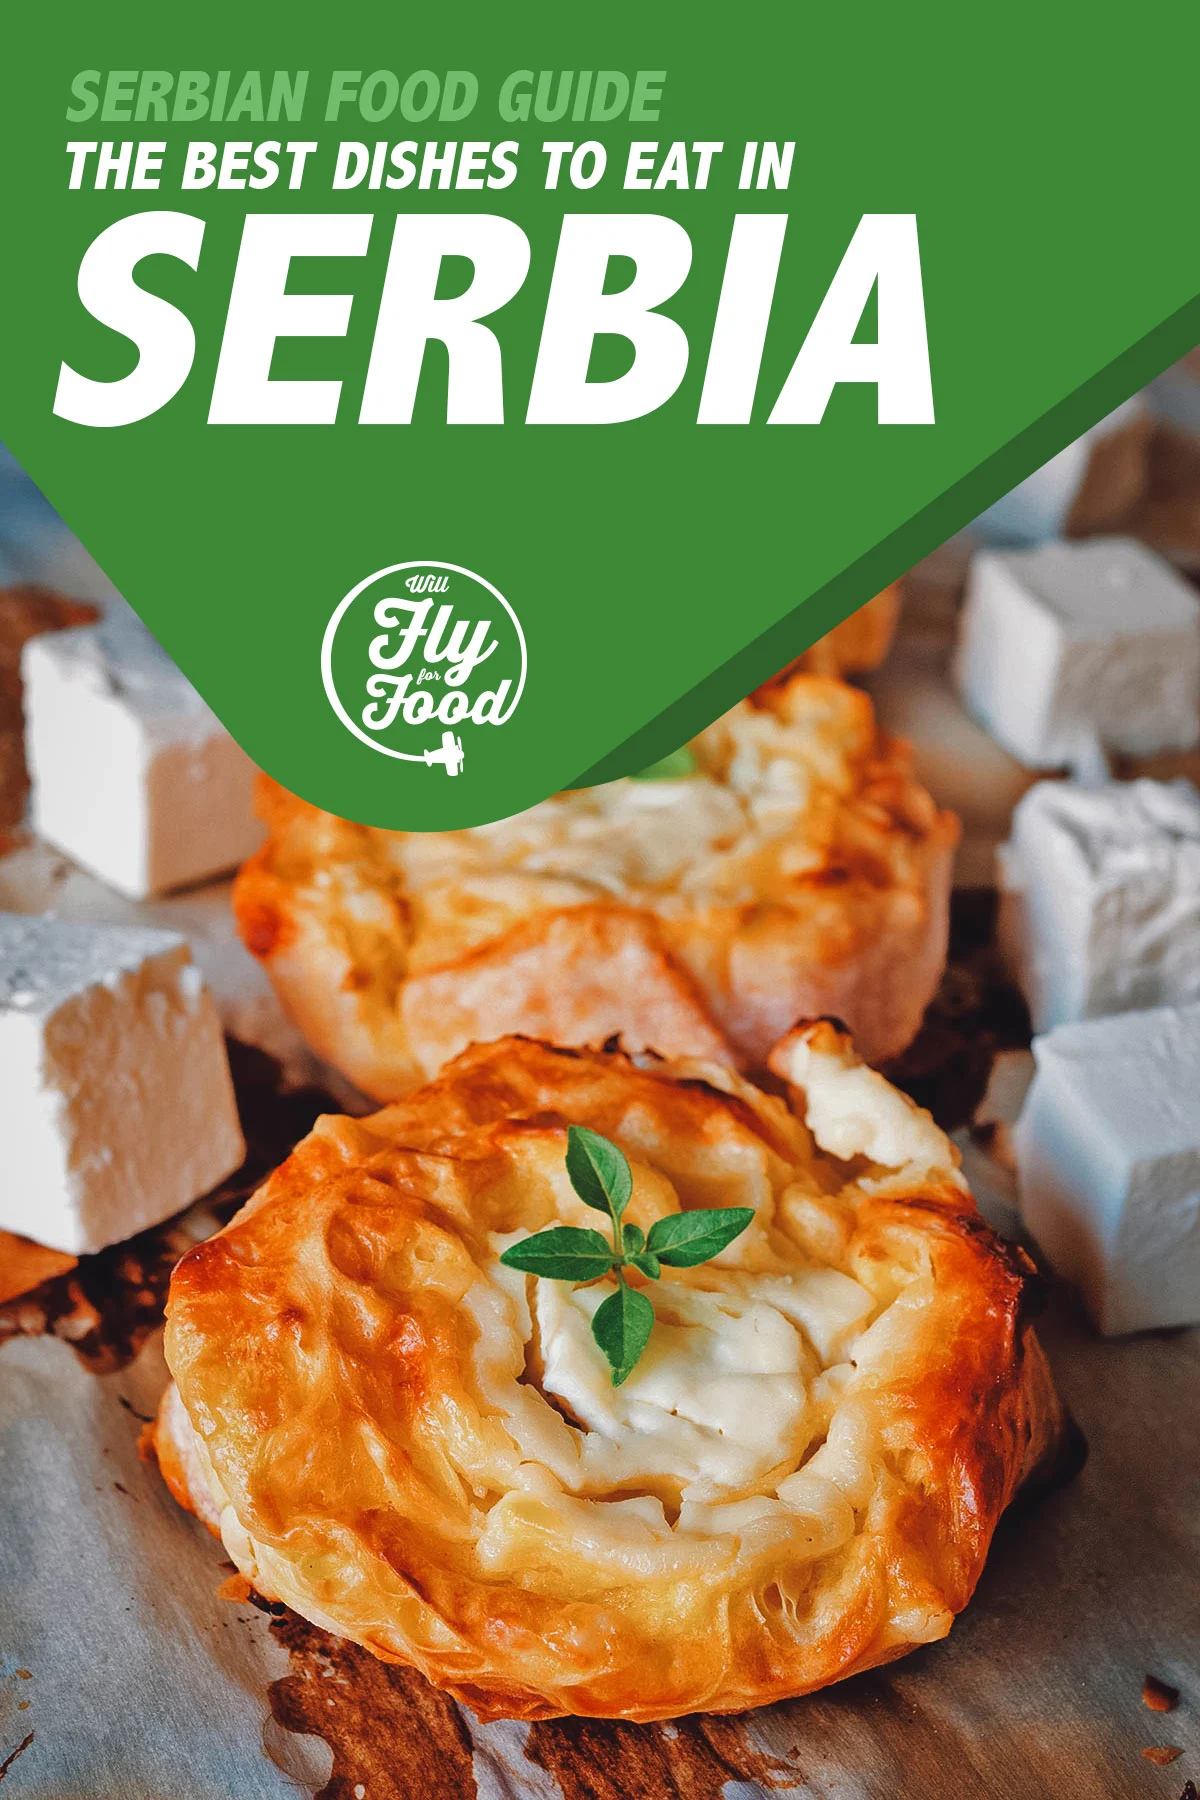 Gibanica, Serbian cheese pie